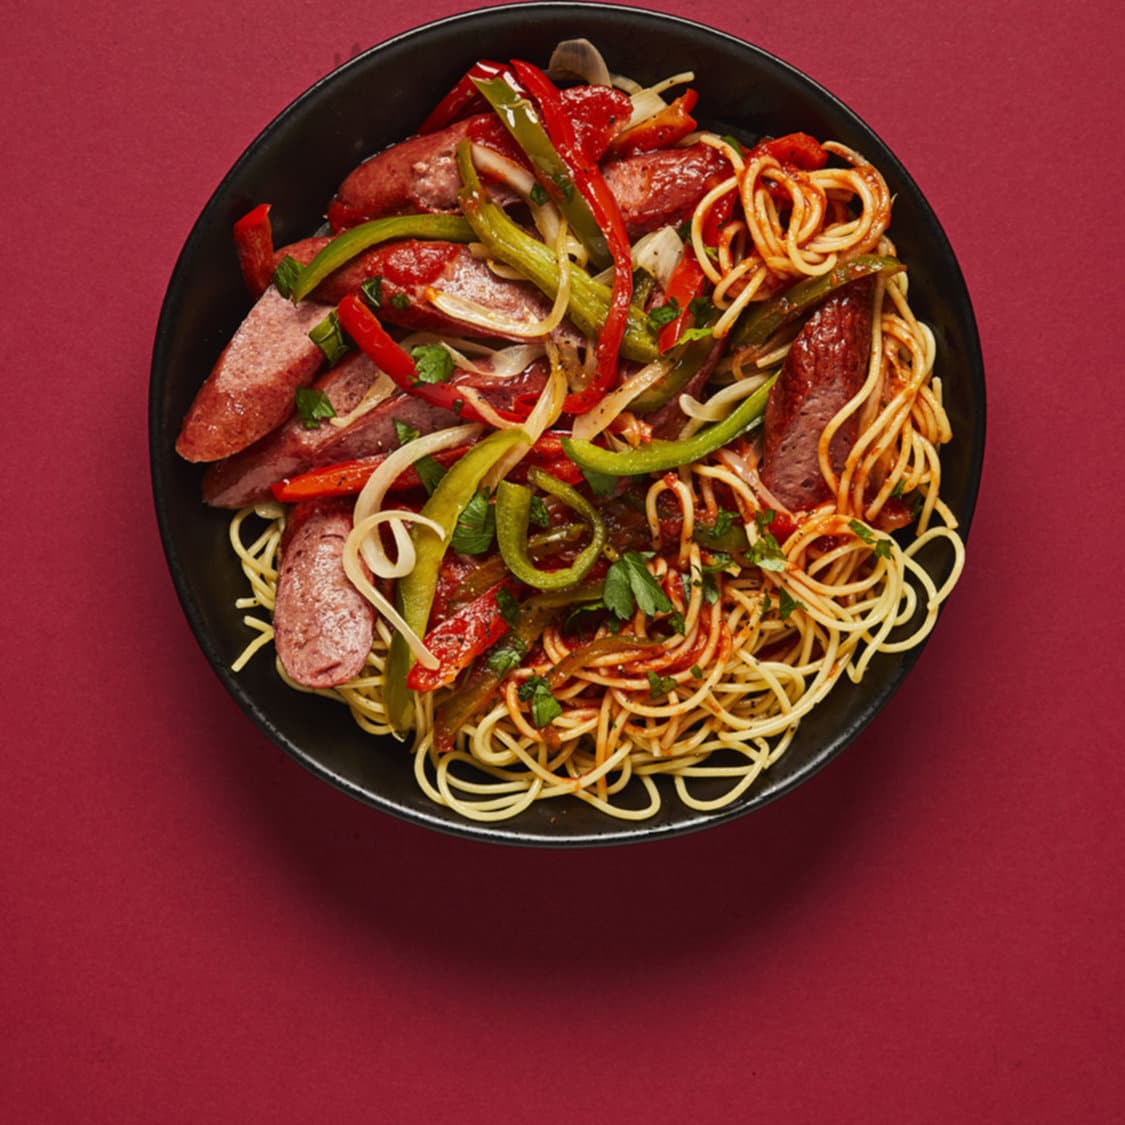 https://fleishigs.com/images/mobile-app/recipes/670-list-sausage-and-pepper-spaghetti.jpg